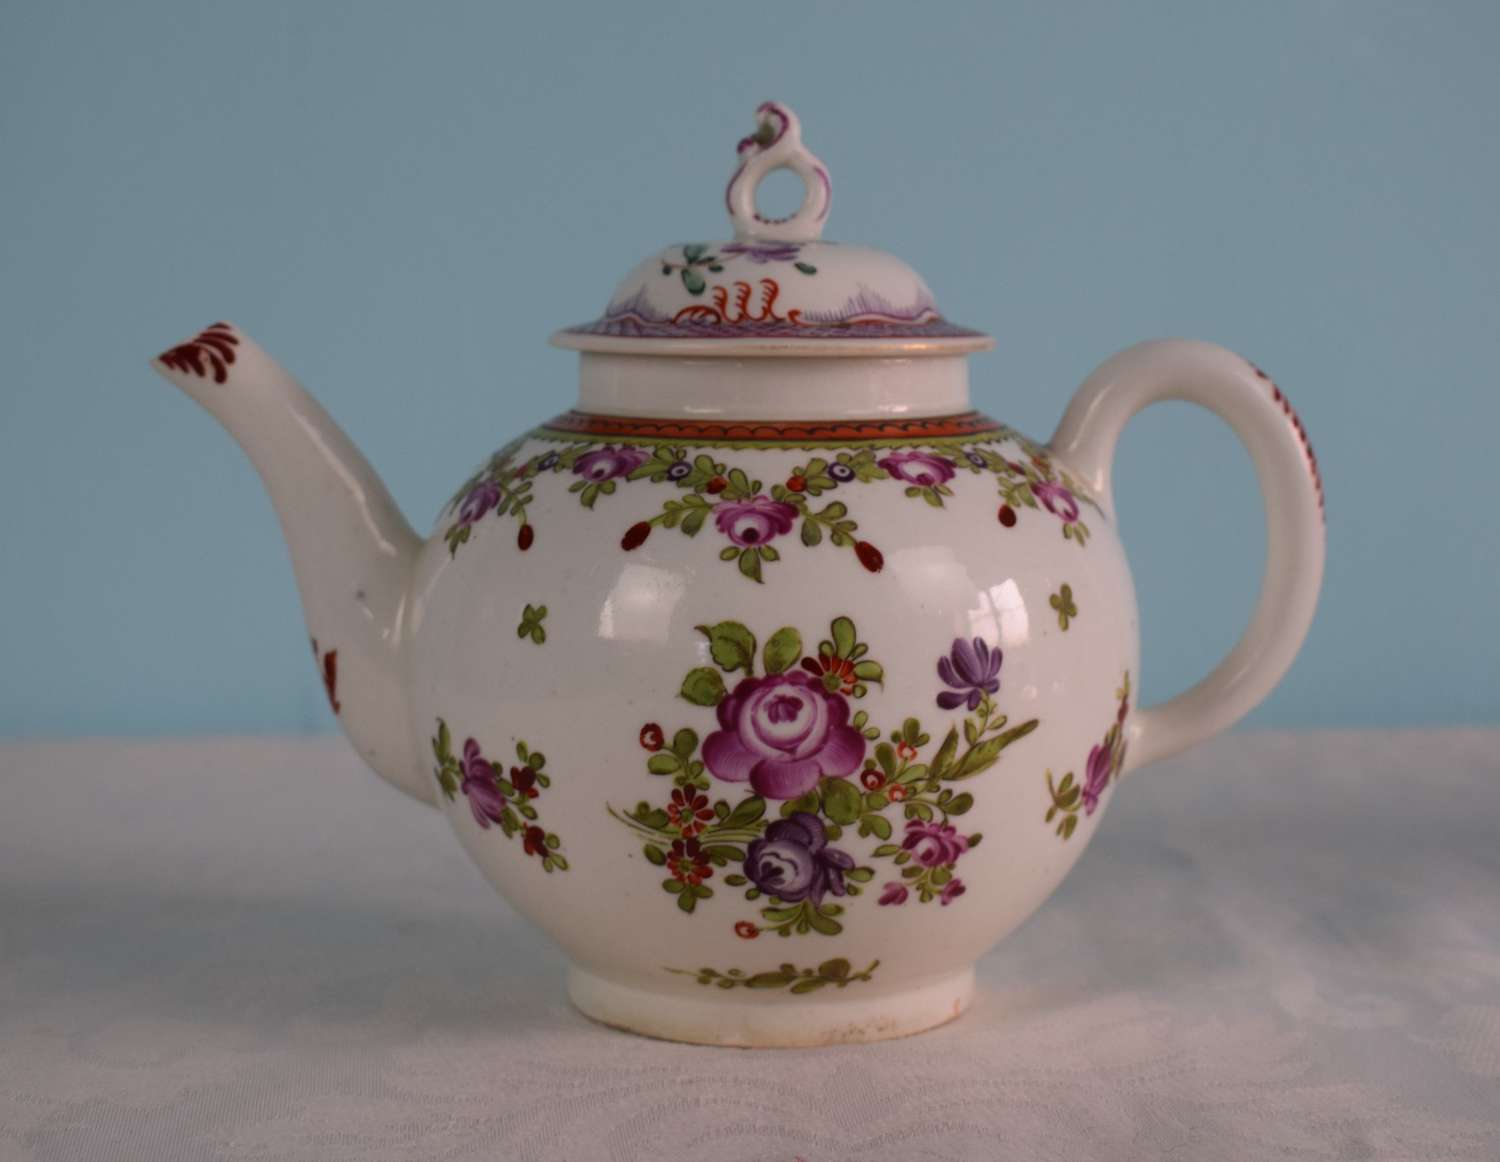 Lowestoft Porcelain Teapot 18th Century Matched Cover c.1770